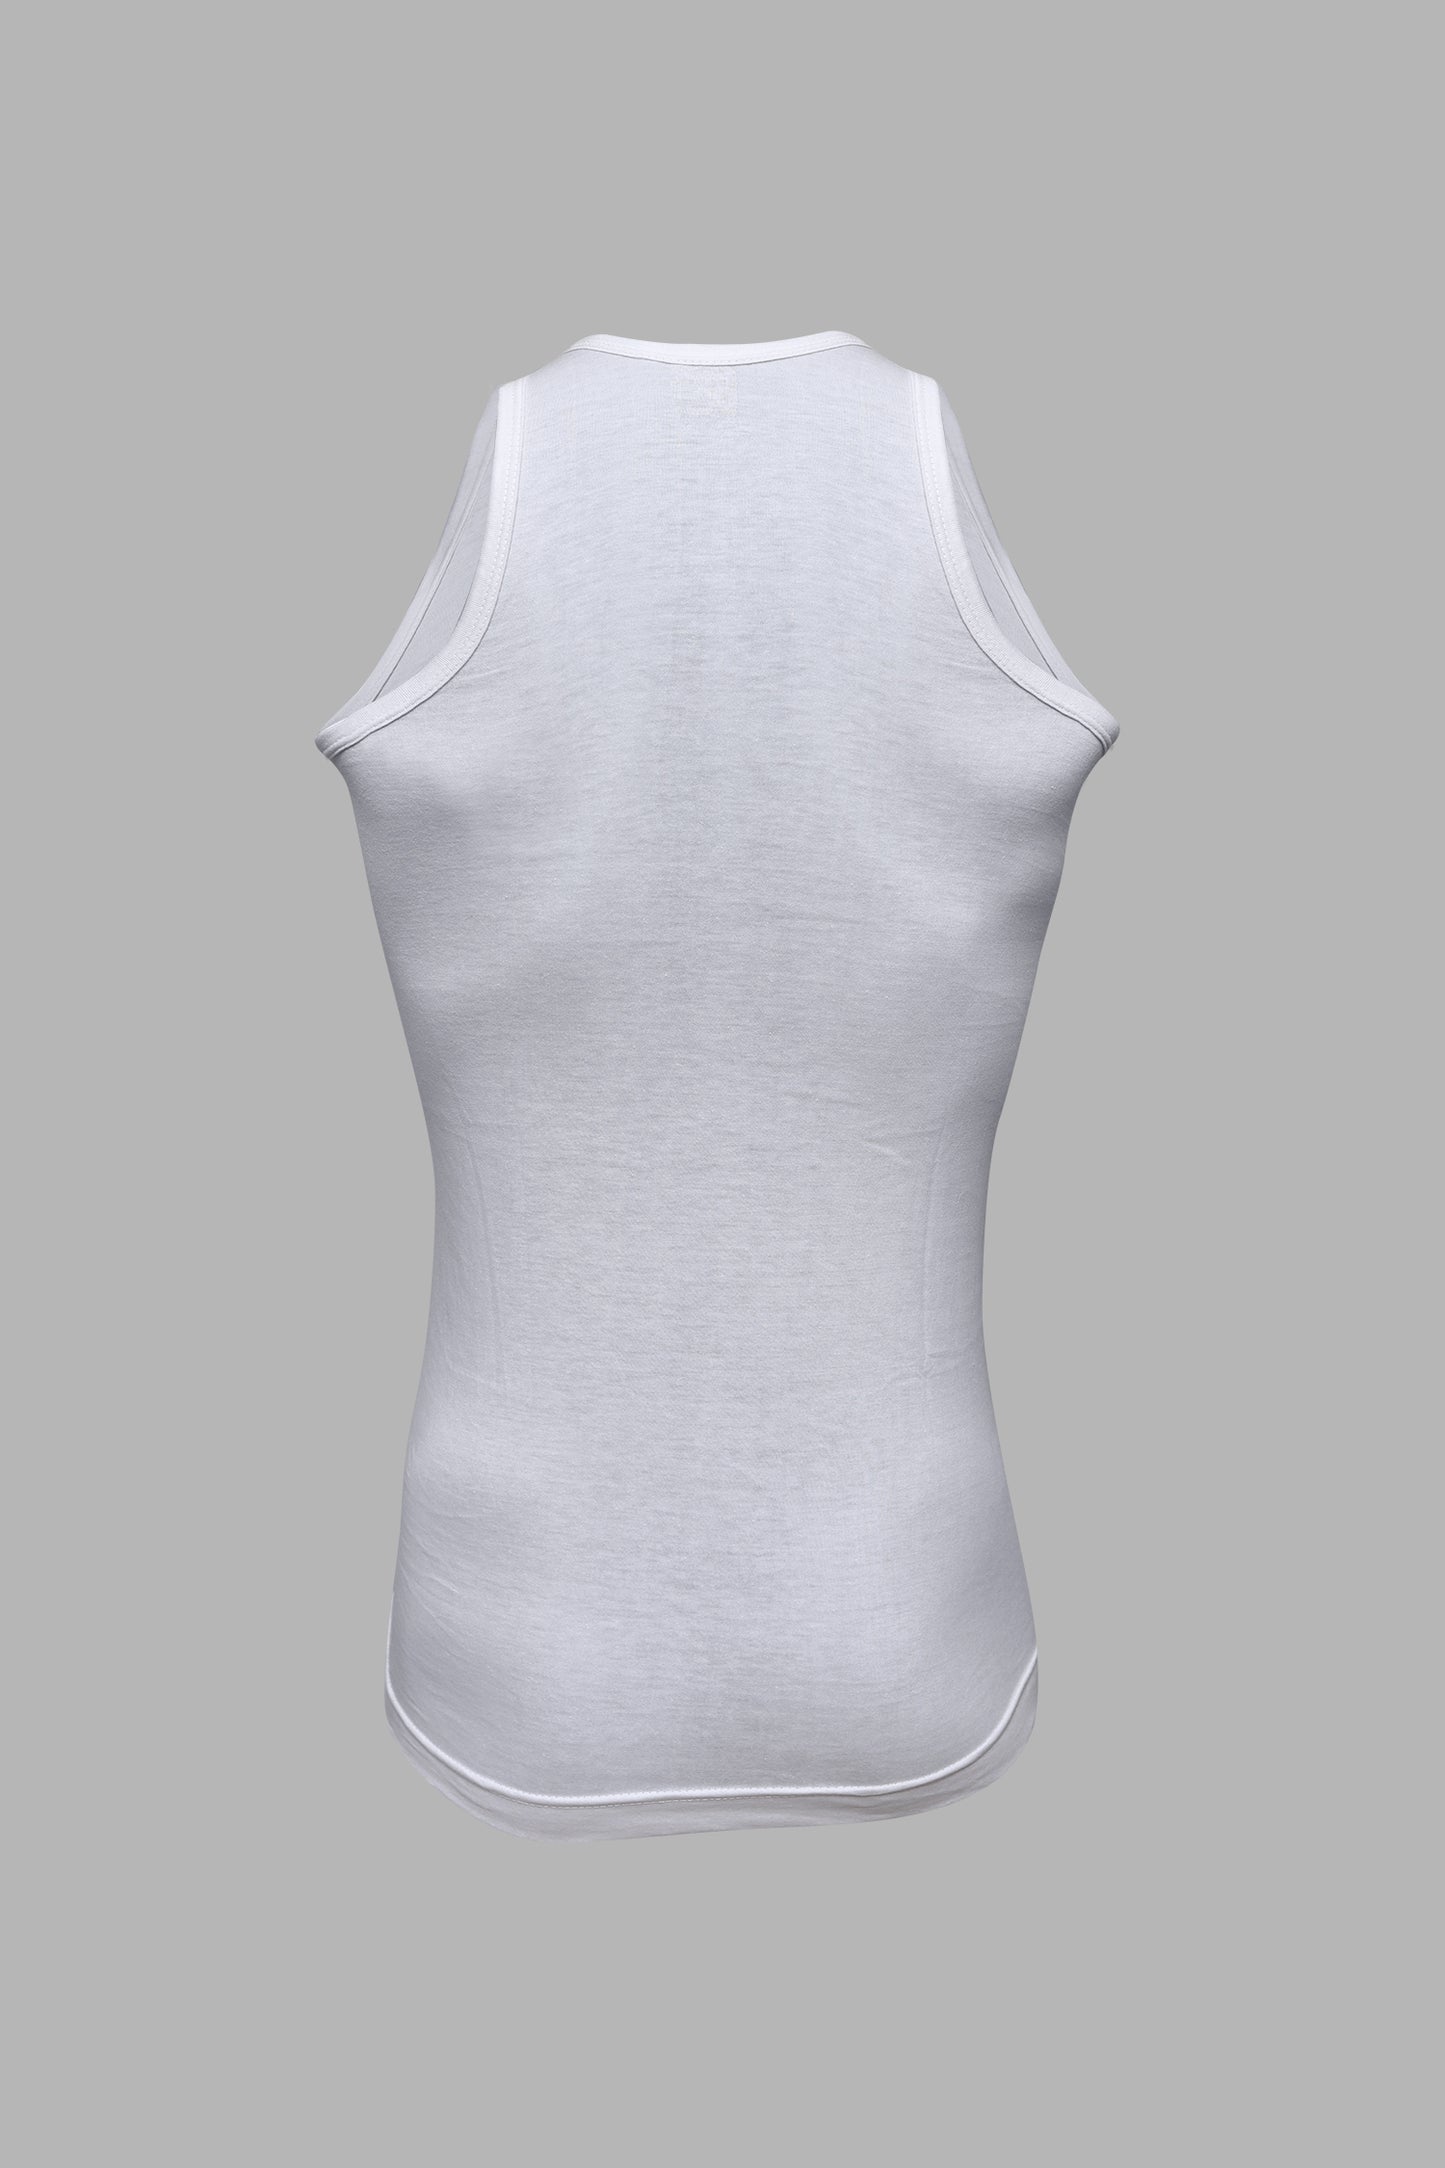 ARINO® Luxury Single Jersey Fabric Sleeveless Men's Vest (Summer Queen)